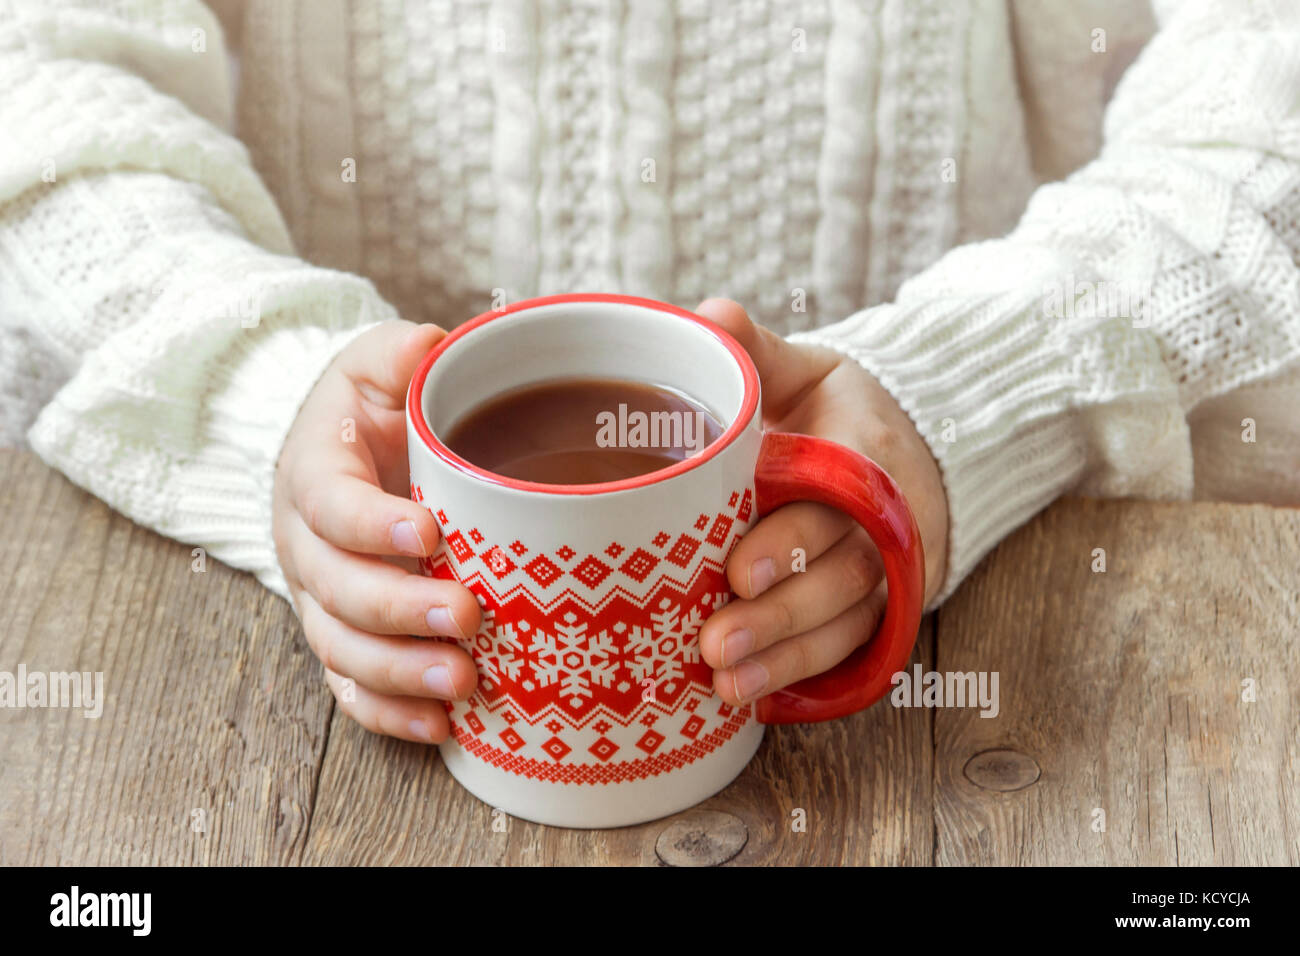 https://c8.alamy.com/comp/KCYCJA/female-hands-holding-red-mug-of-hot-chocolate-coffee-on-rustic-wooden-KCYCJA.jpg